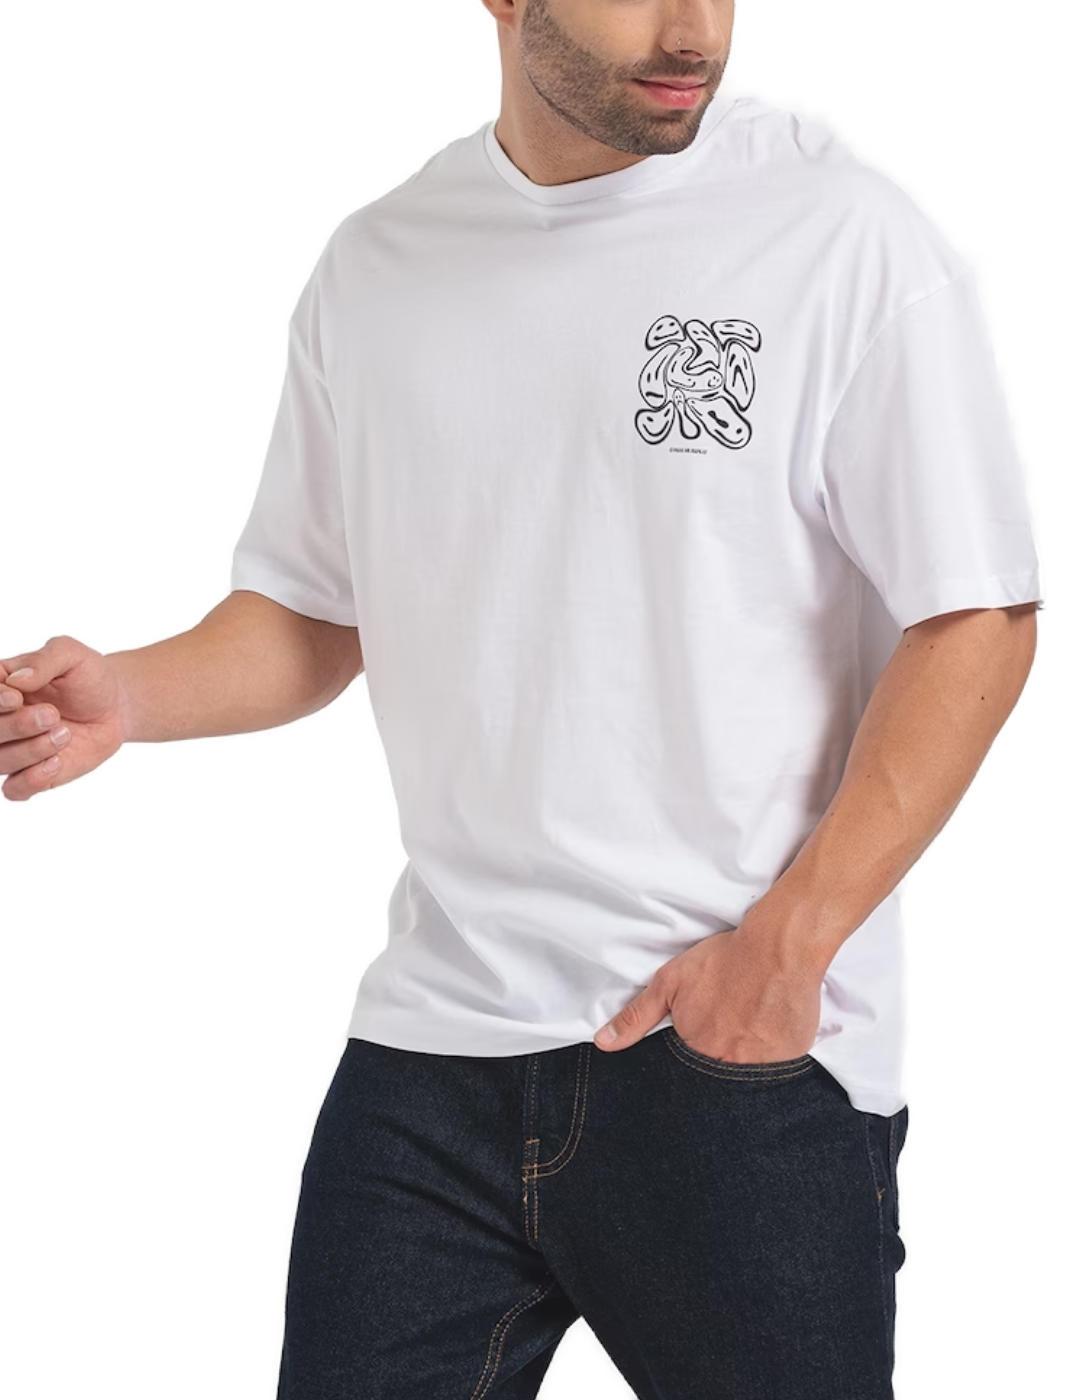 Camiseta Jack&Jones Laught blanca de manga corta para hombre